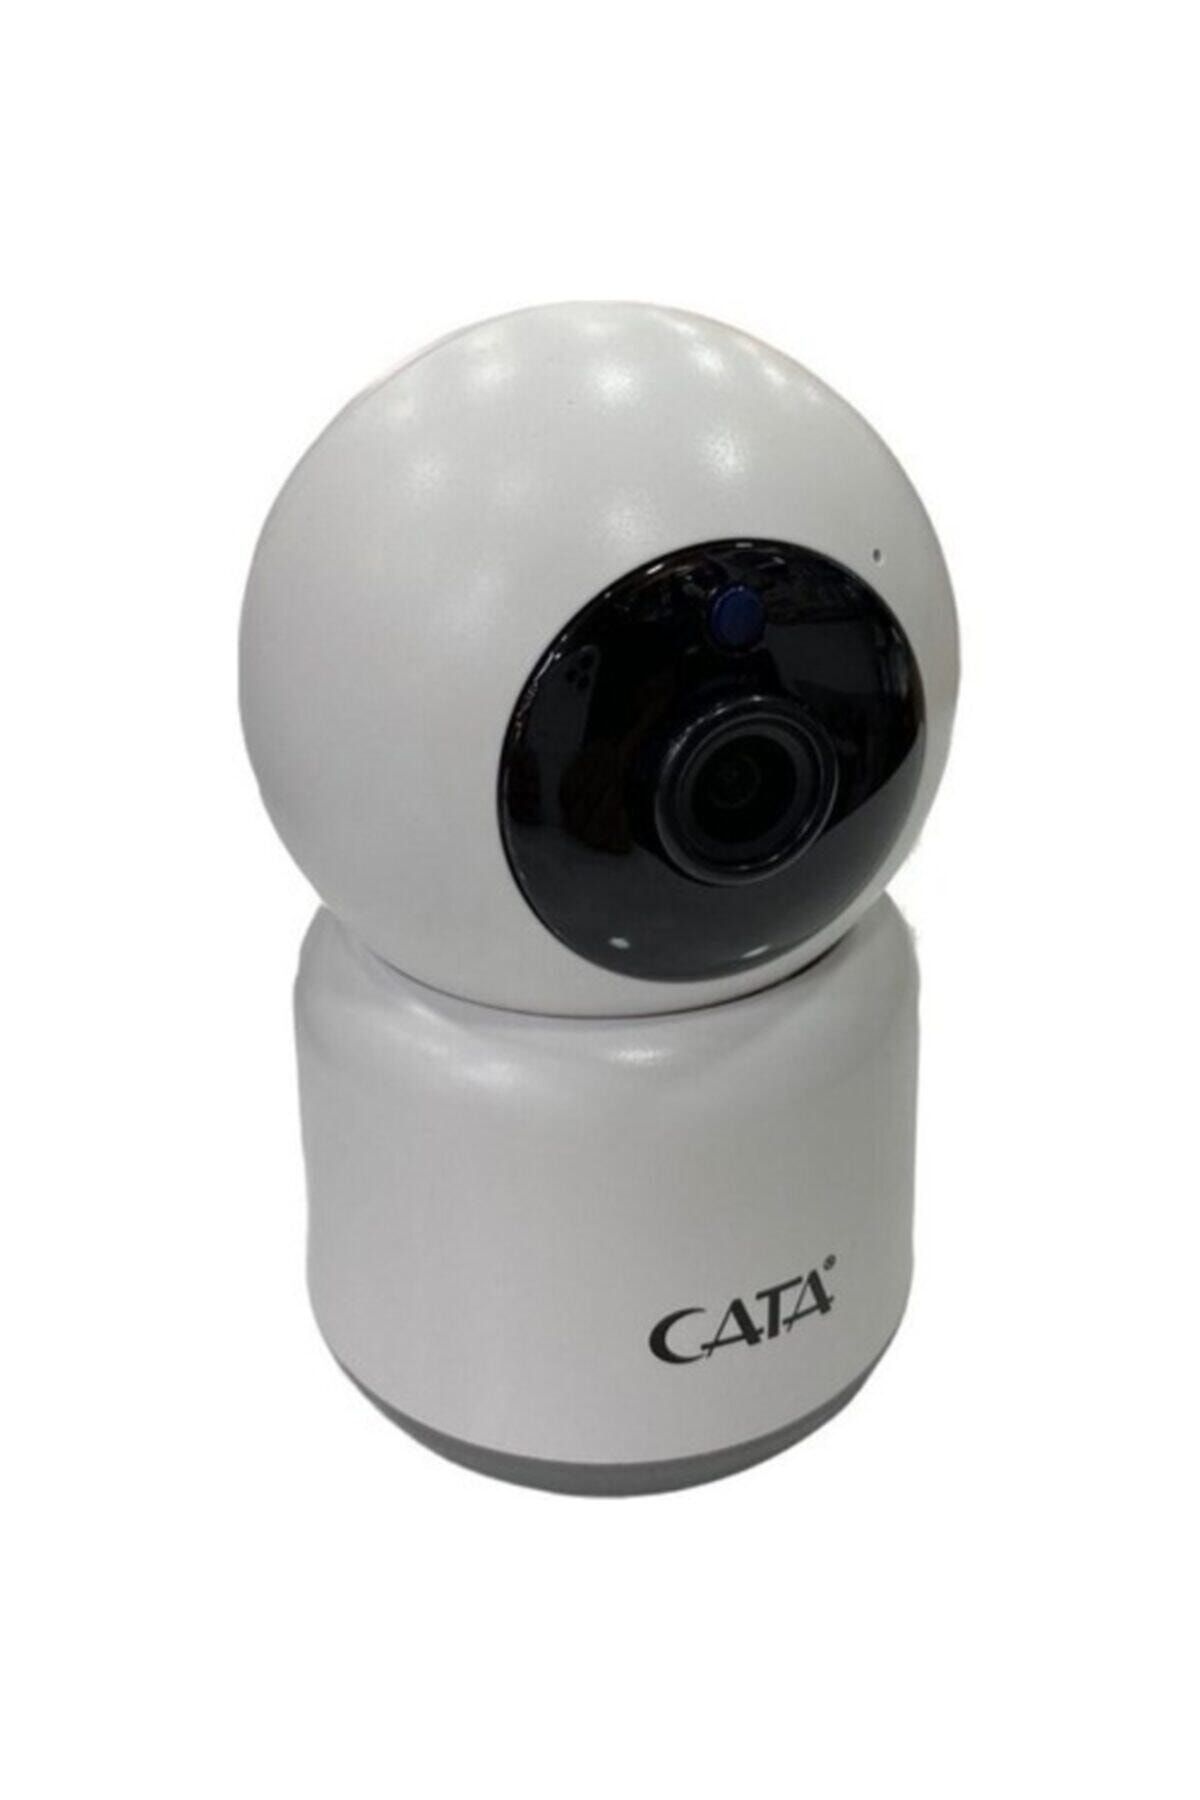 Cata Akıllı Kamera Ct-4050 (bt-1004) / Güvenlik